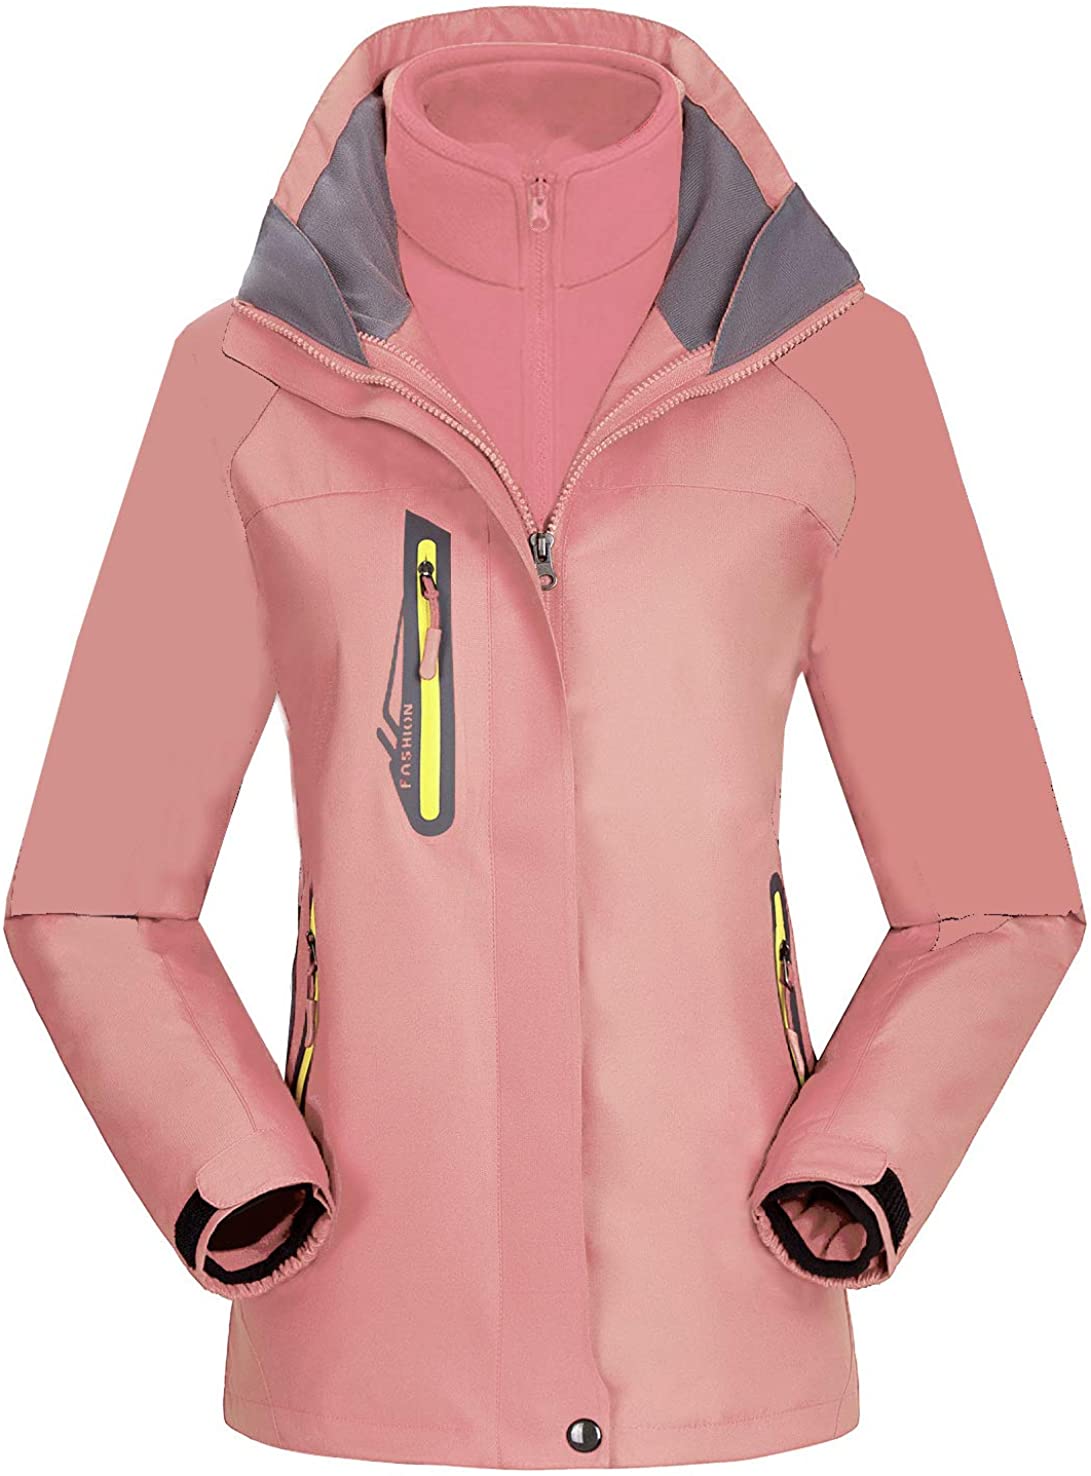 AbelWay Womens Outdoor Mountain Waterproof Windproof Fleece Ski Hooded Jacket Rain Coat